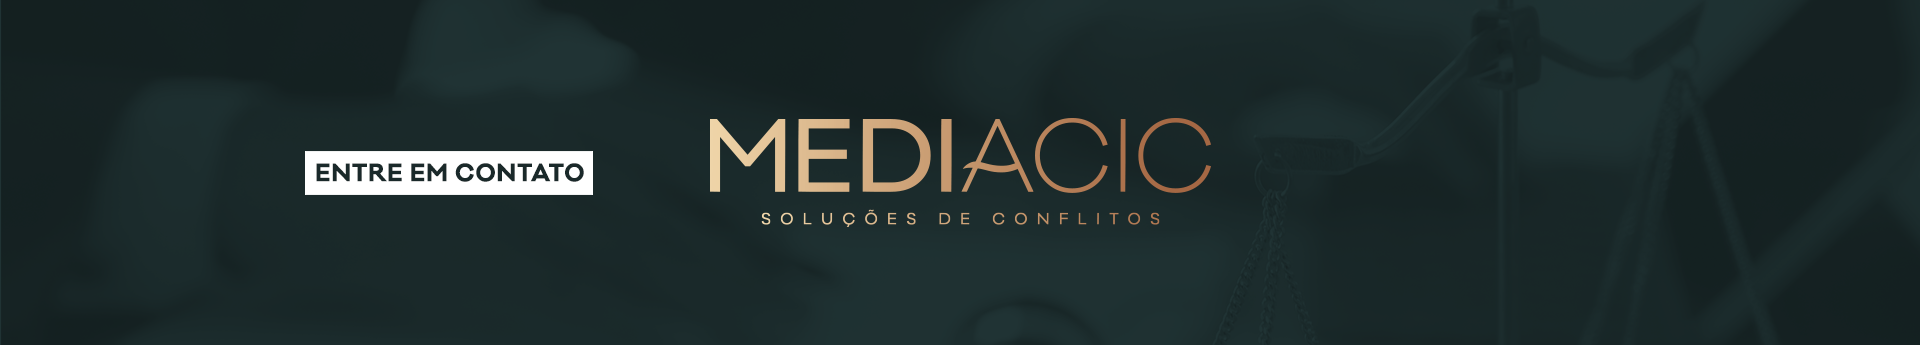 Mediacic